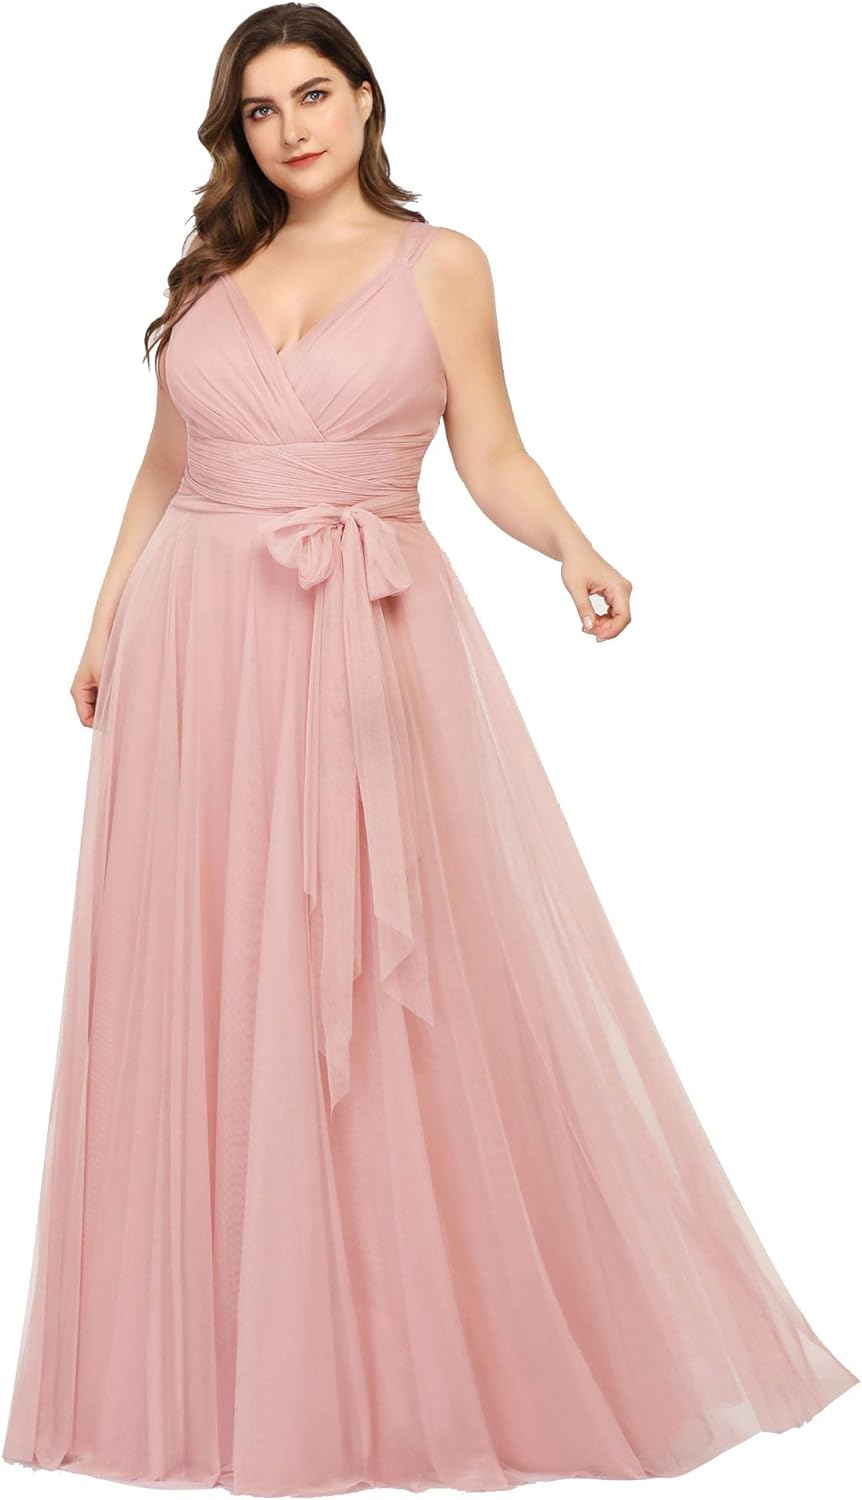 Elegant and Flattering: Ever-Pretty Plus Women’s V-Neck Wrap Empire Waist Sash Tulle A-line Plus Size Bridesmaid Dresses 07303-DA Review